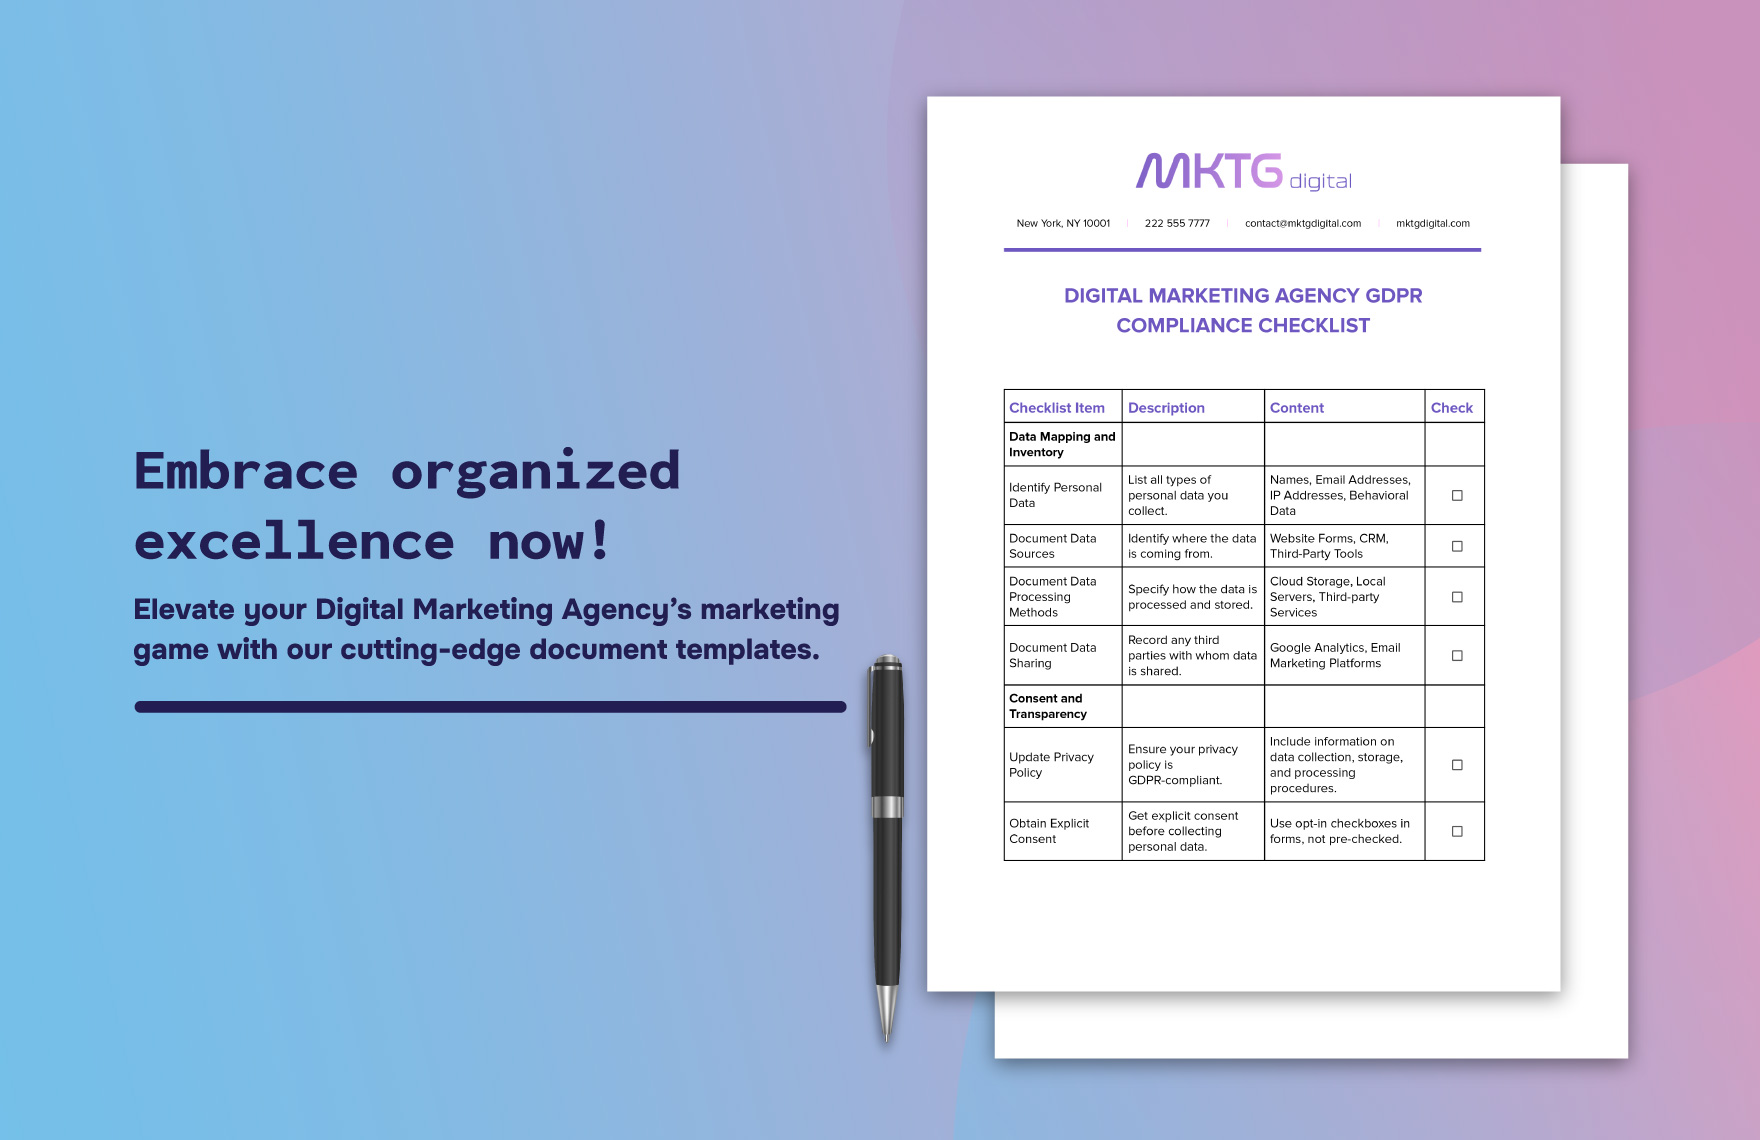 Digital Marketing Agency GDPR Compliance Checklist Template